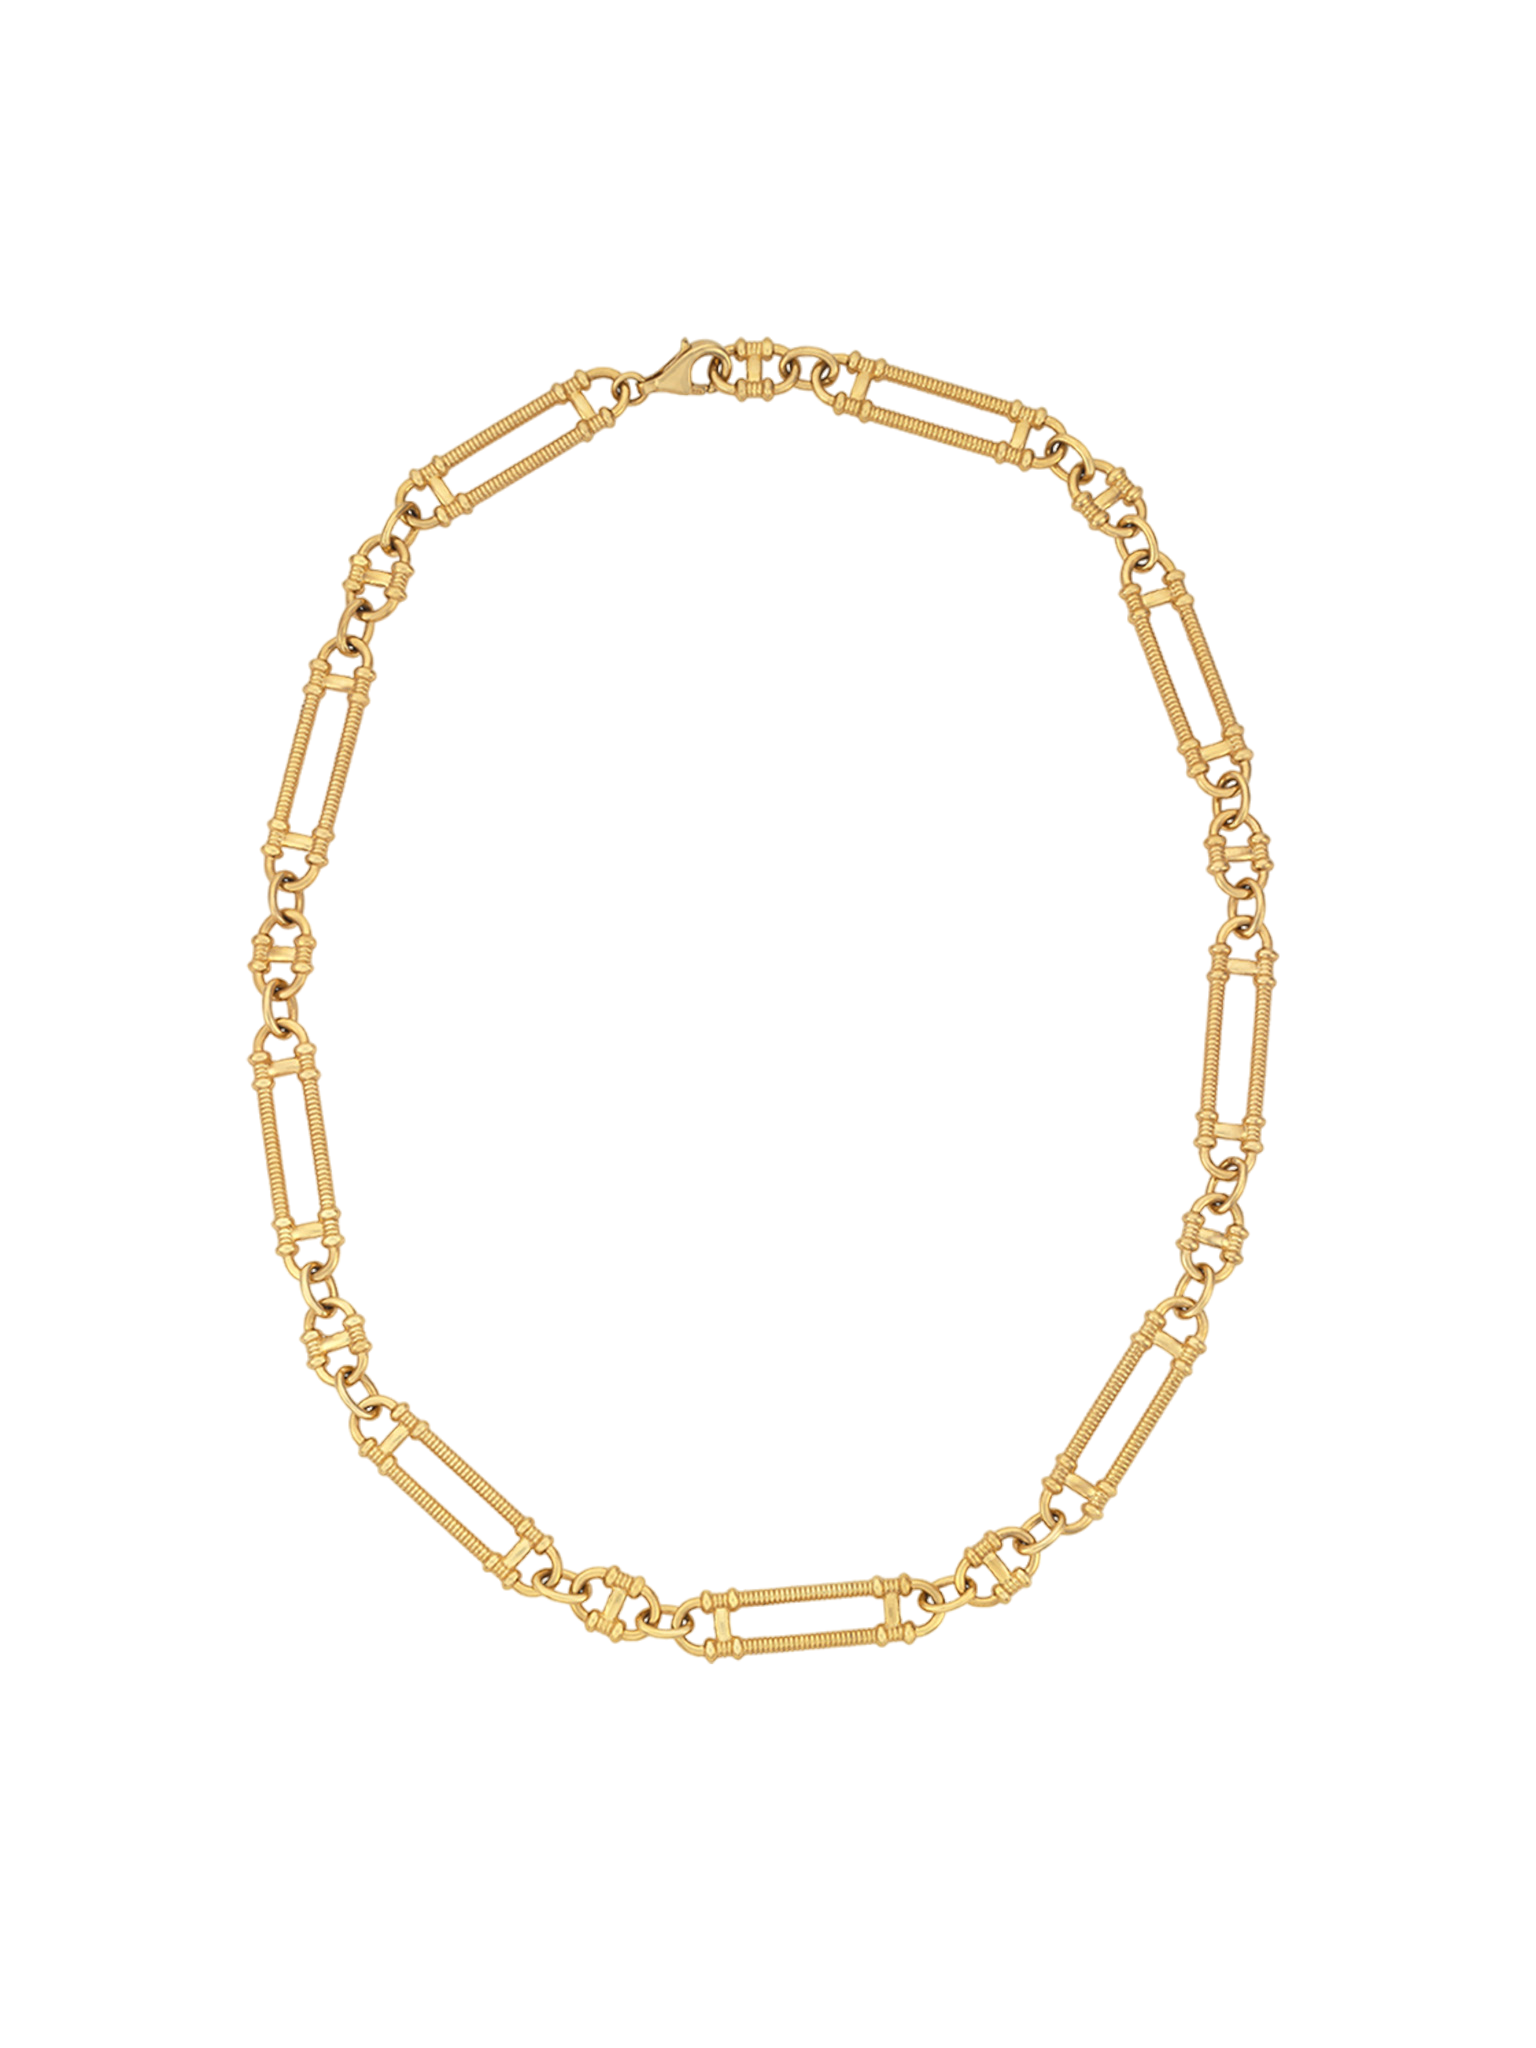 Prana chain necklace